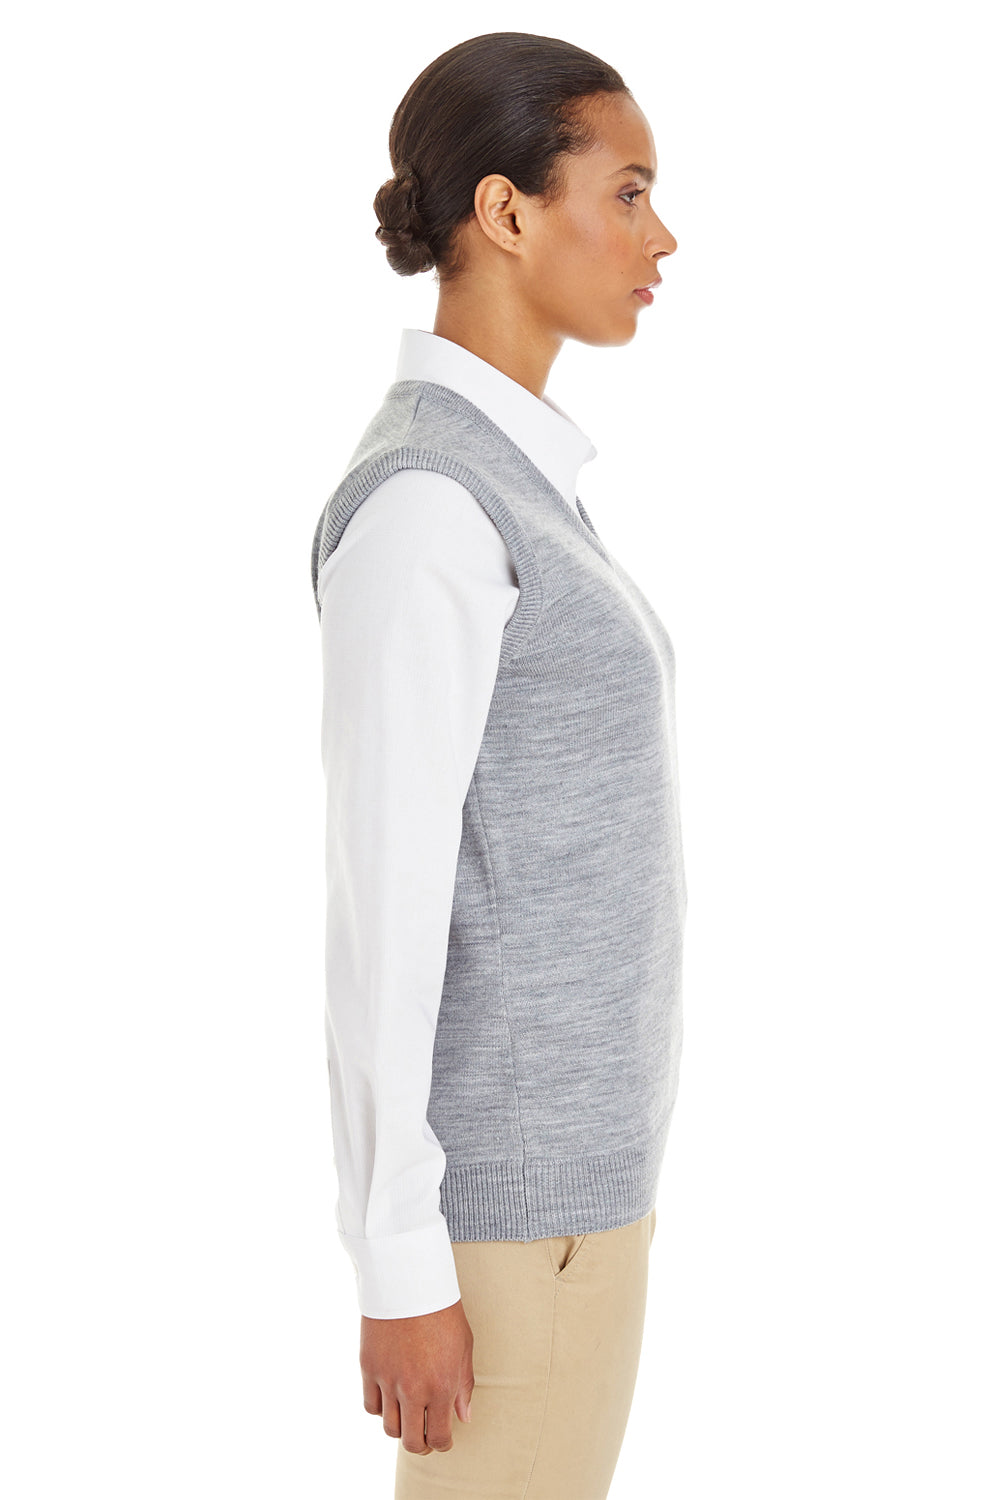 Harriton M415W Womens Pilbloc V-Neck Sweater Vest Heather Grey Side